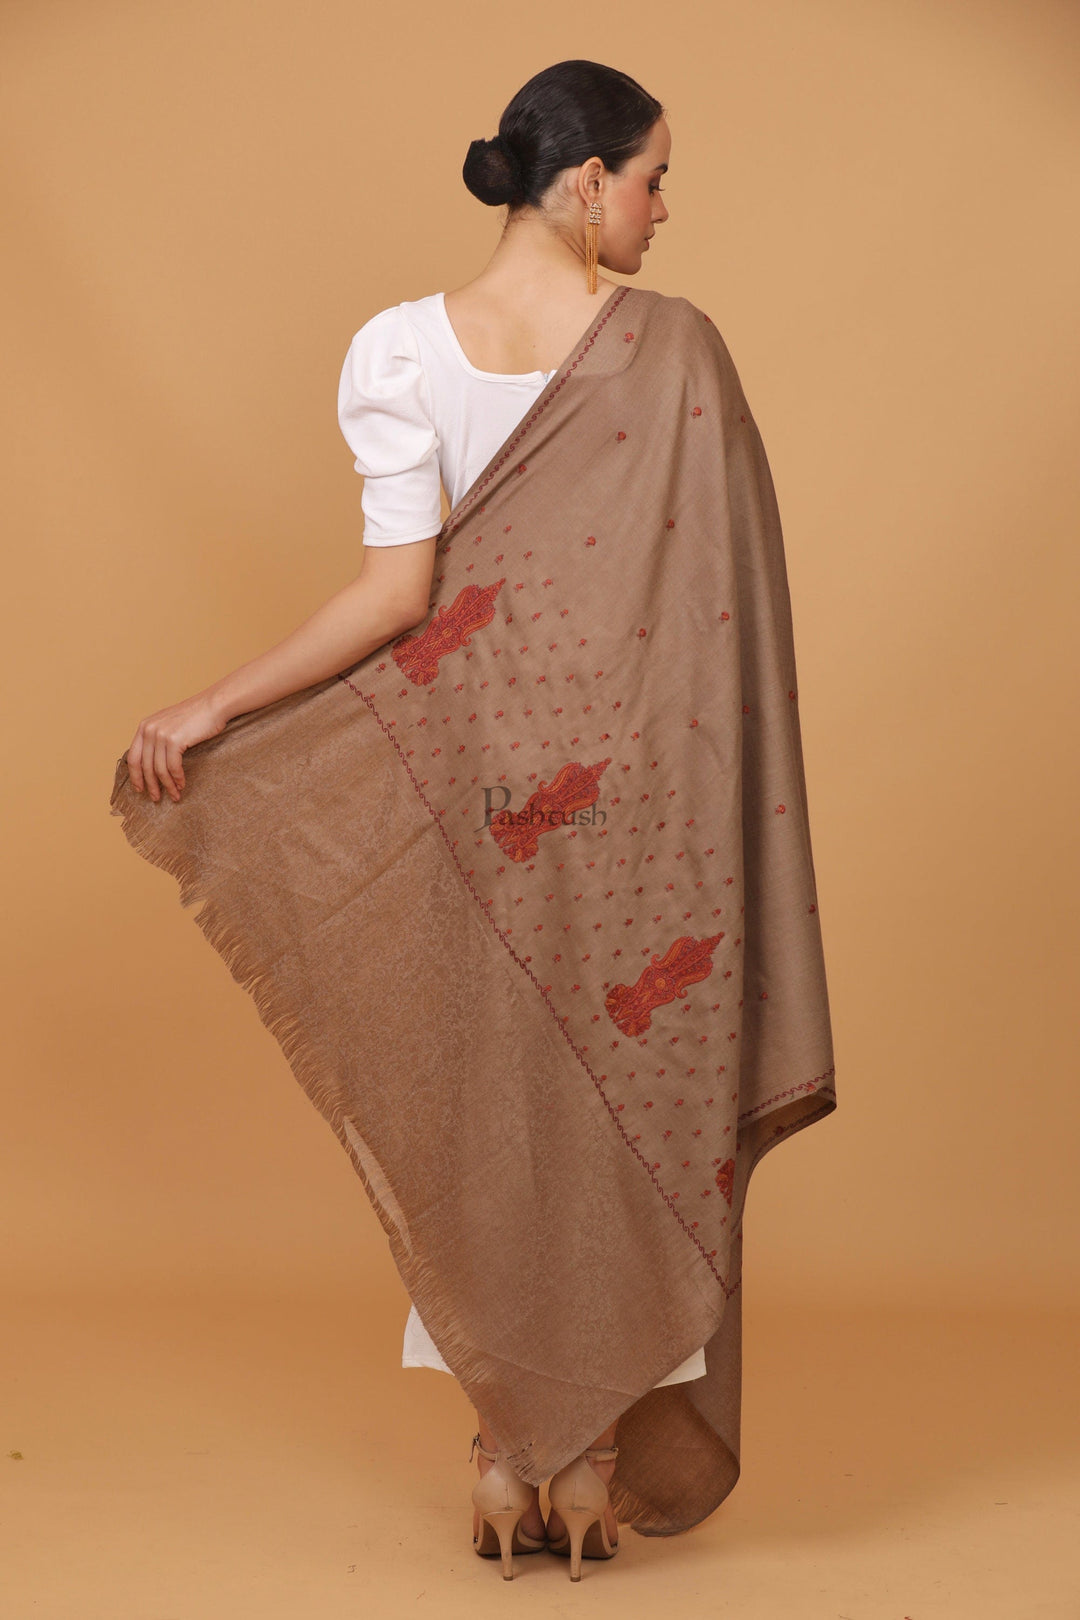 Pashtush India Womens Stoles and Scarves Scarf Pashtush womens Fine Wool shawl, embroidery shawl Paisley self palla design, Taupe